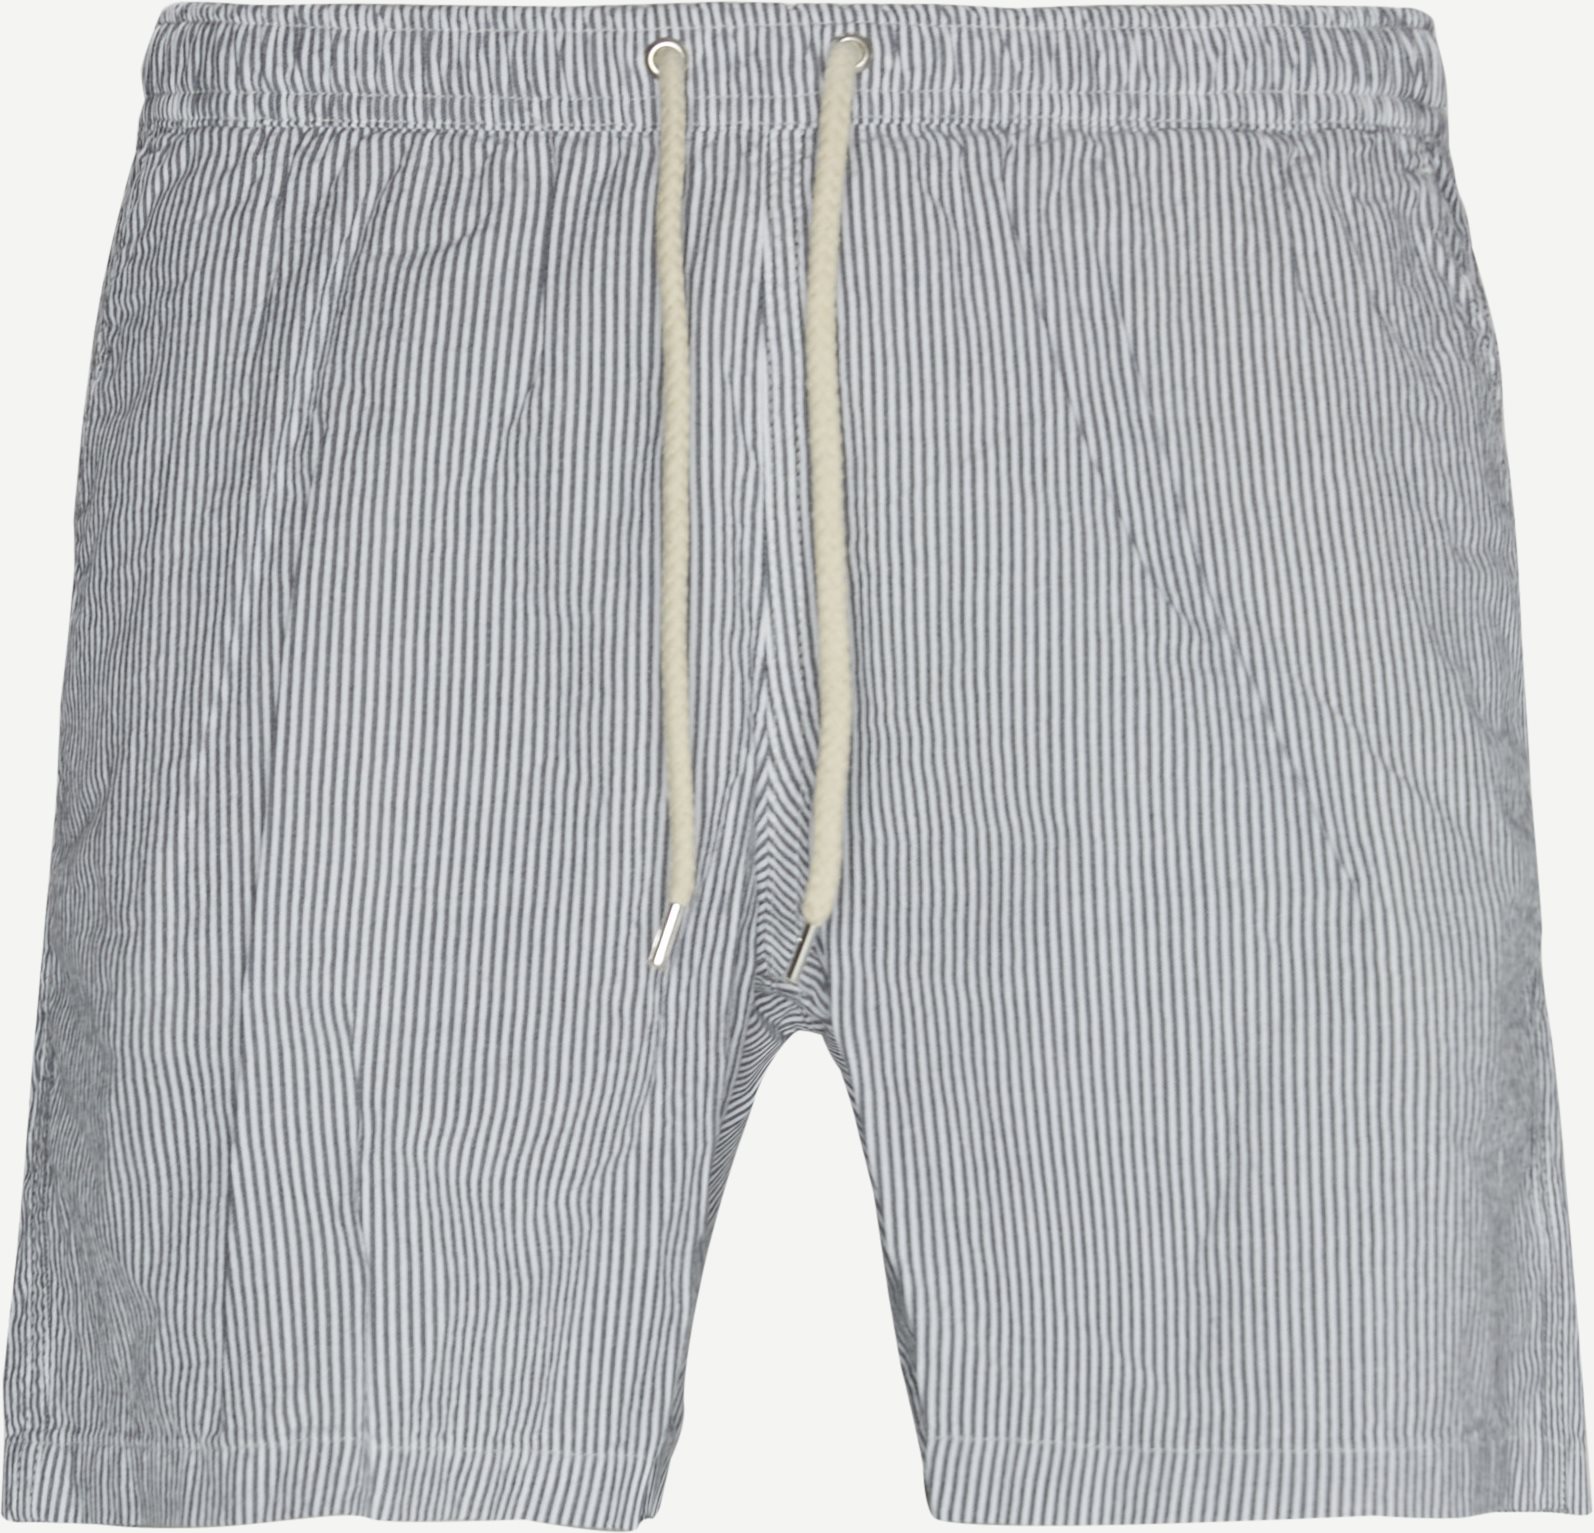 Hill Shorts - Shorts - Regular fit - Multi